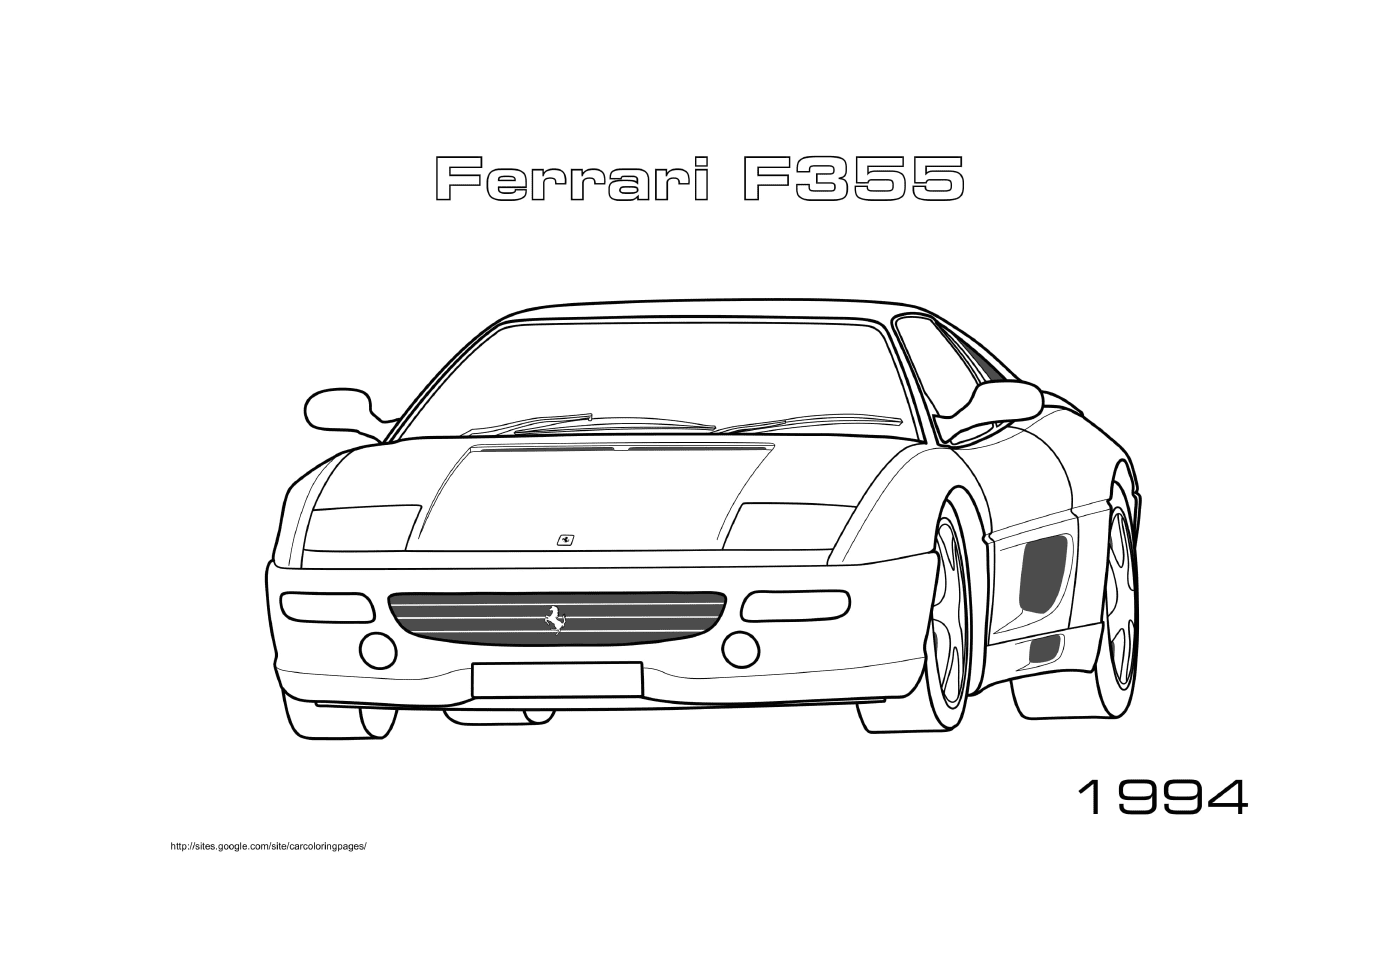  Auto Ferrari F355 1994 